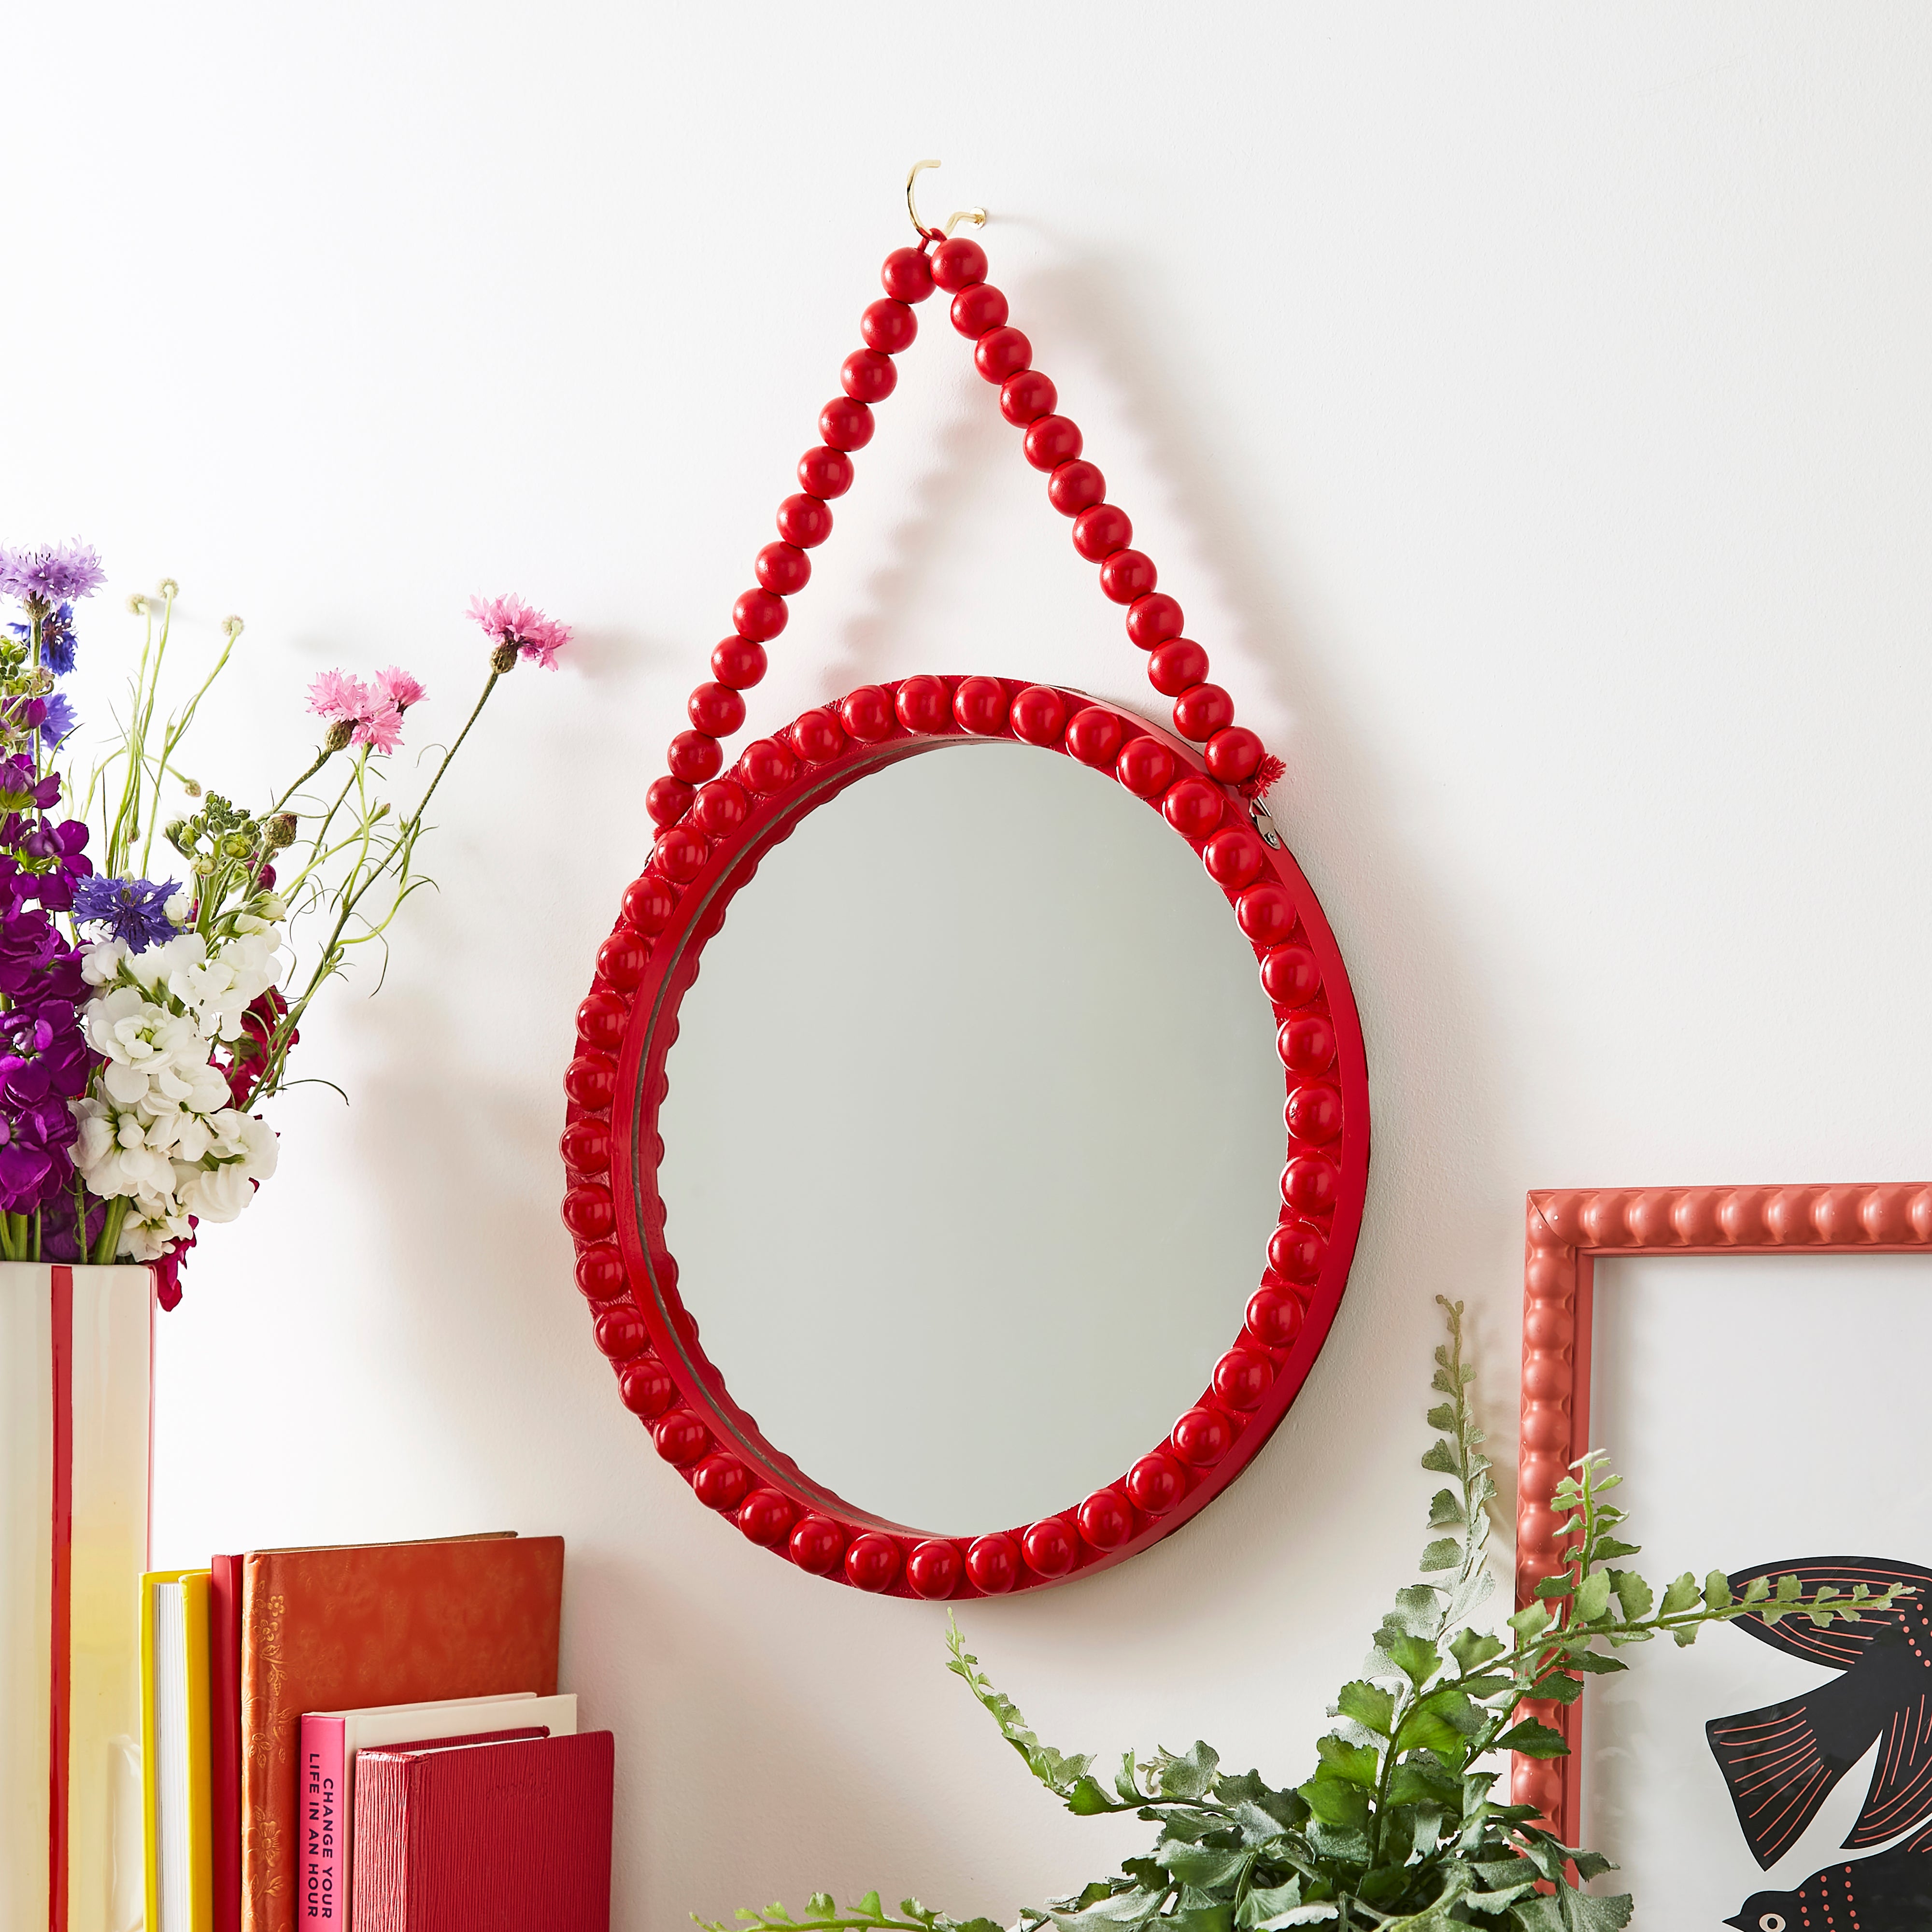 Bobbin Hanging Mirror 30cm Red